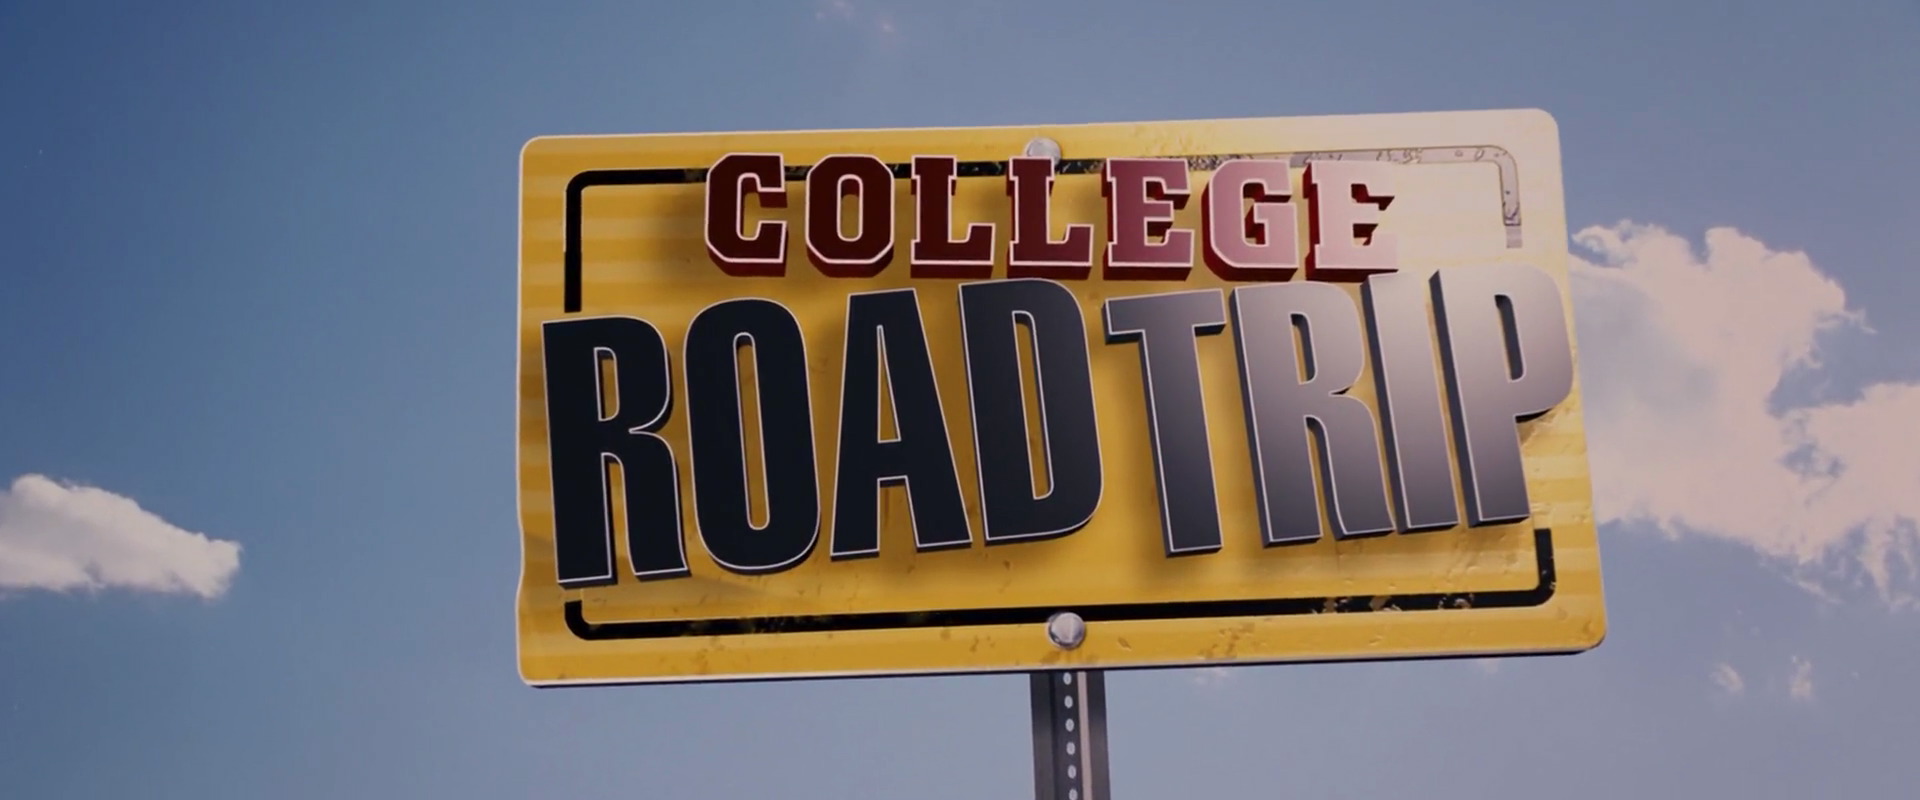 road trip college